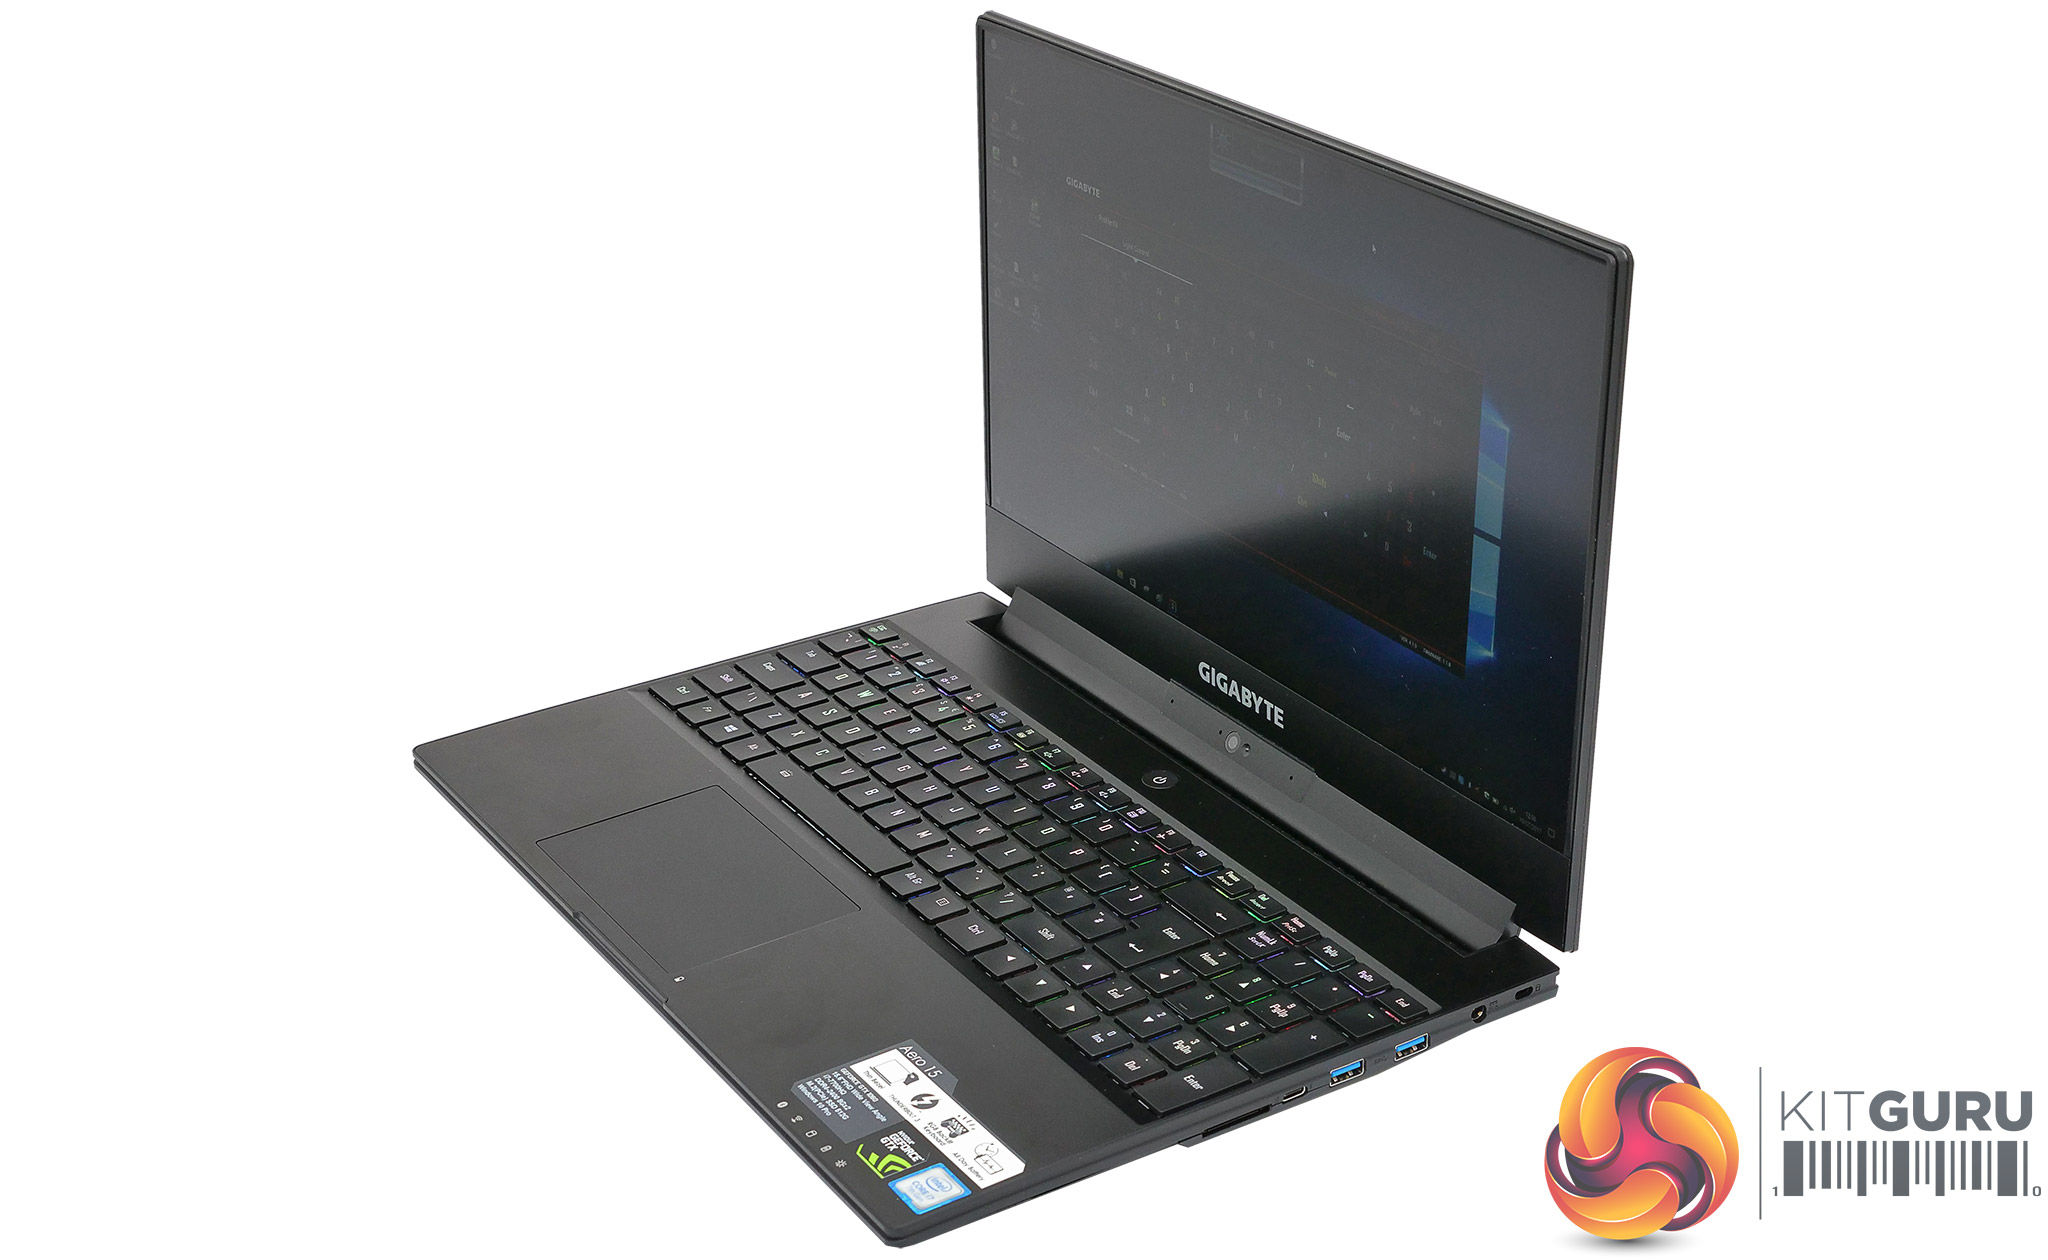 Gigabyte Aero 15W-CF2 (15.6-inch laptop with a tiny screen bezel) | KitGuru